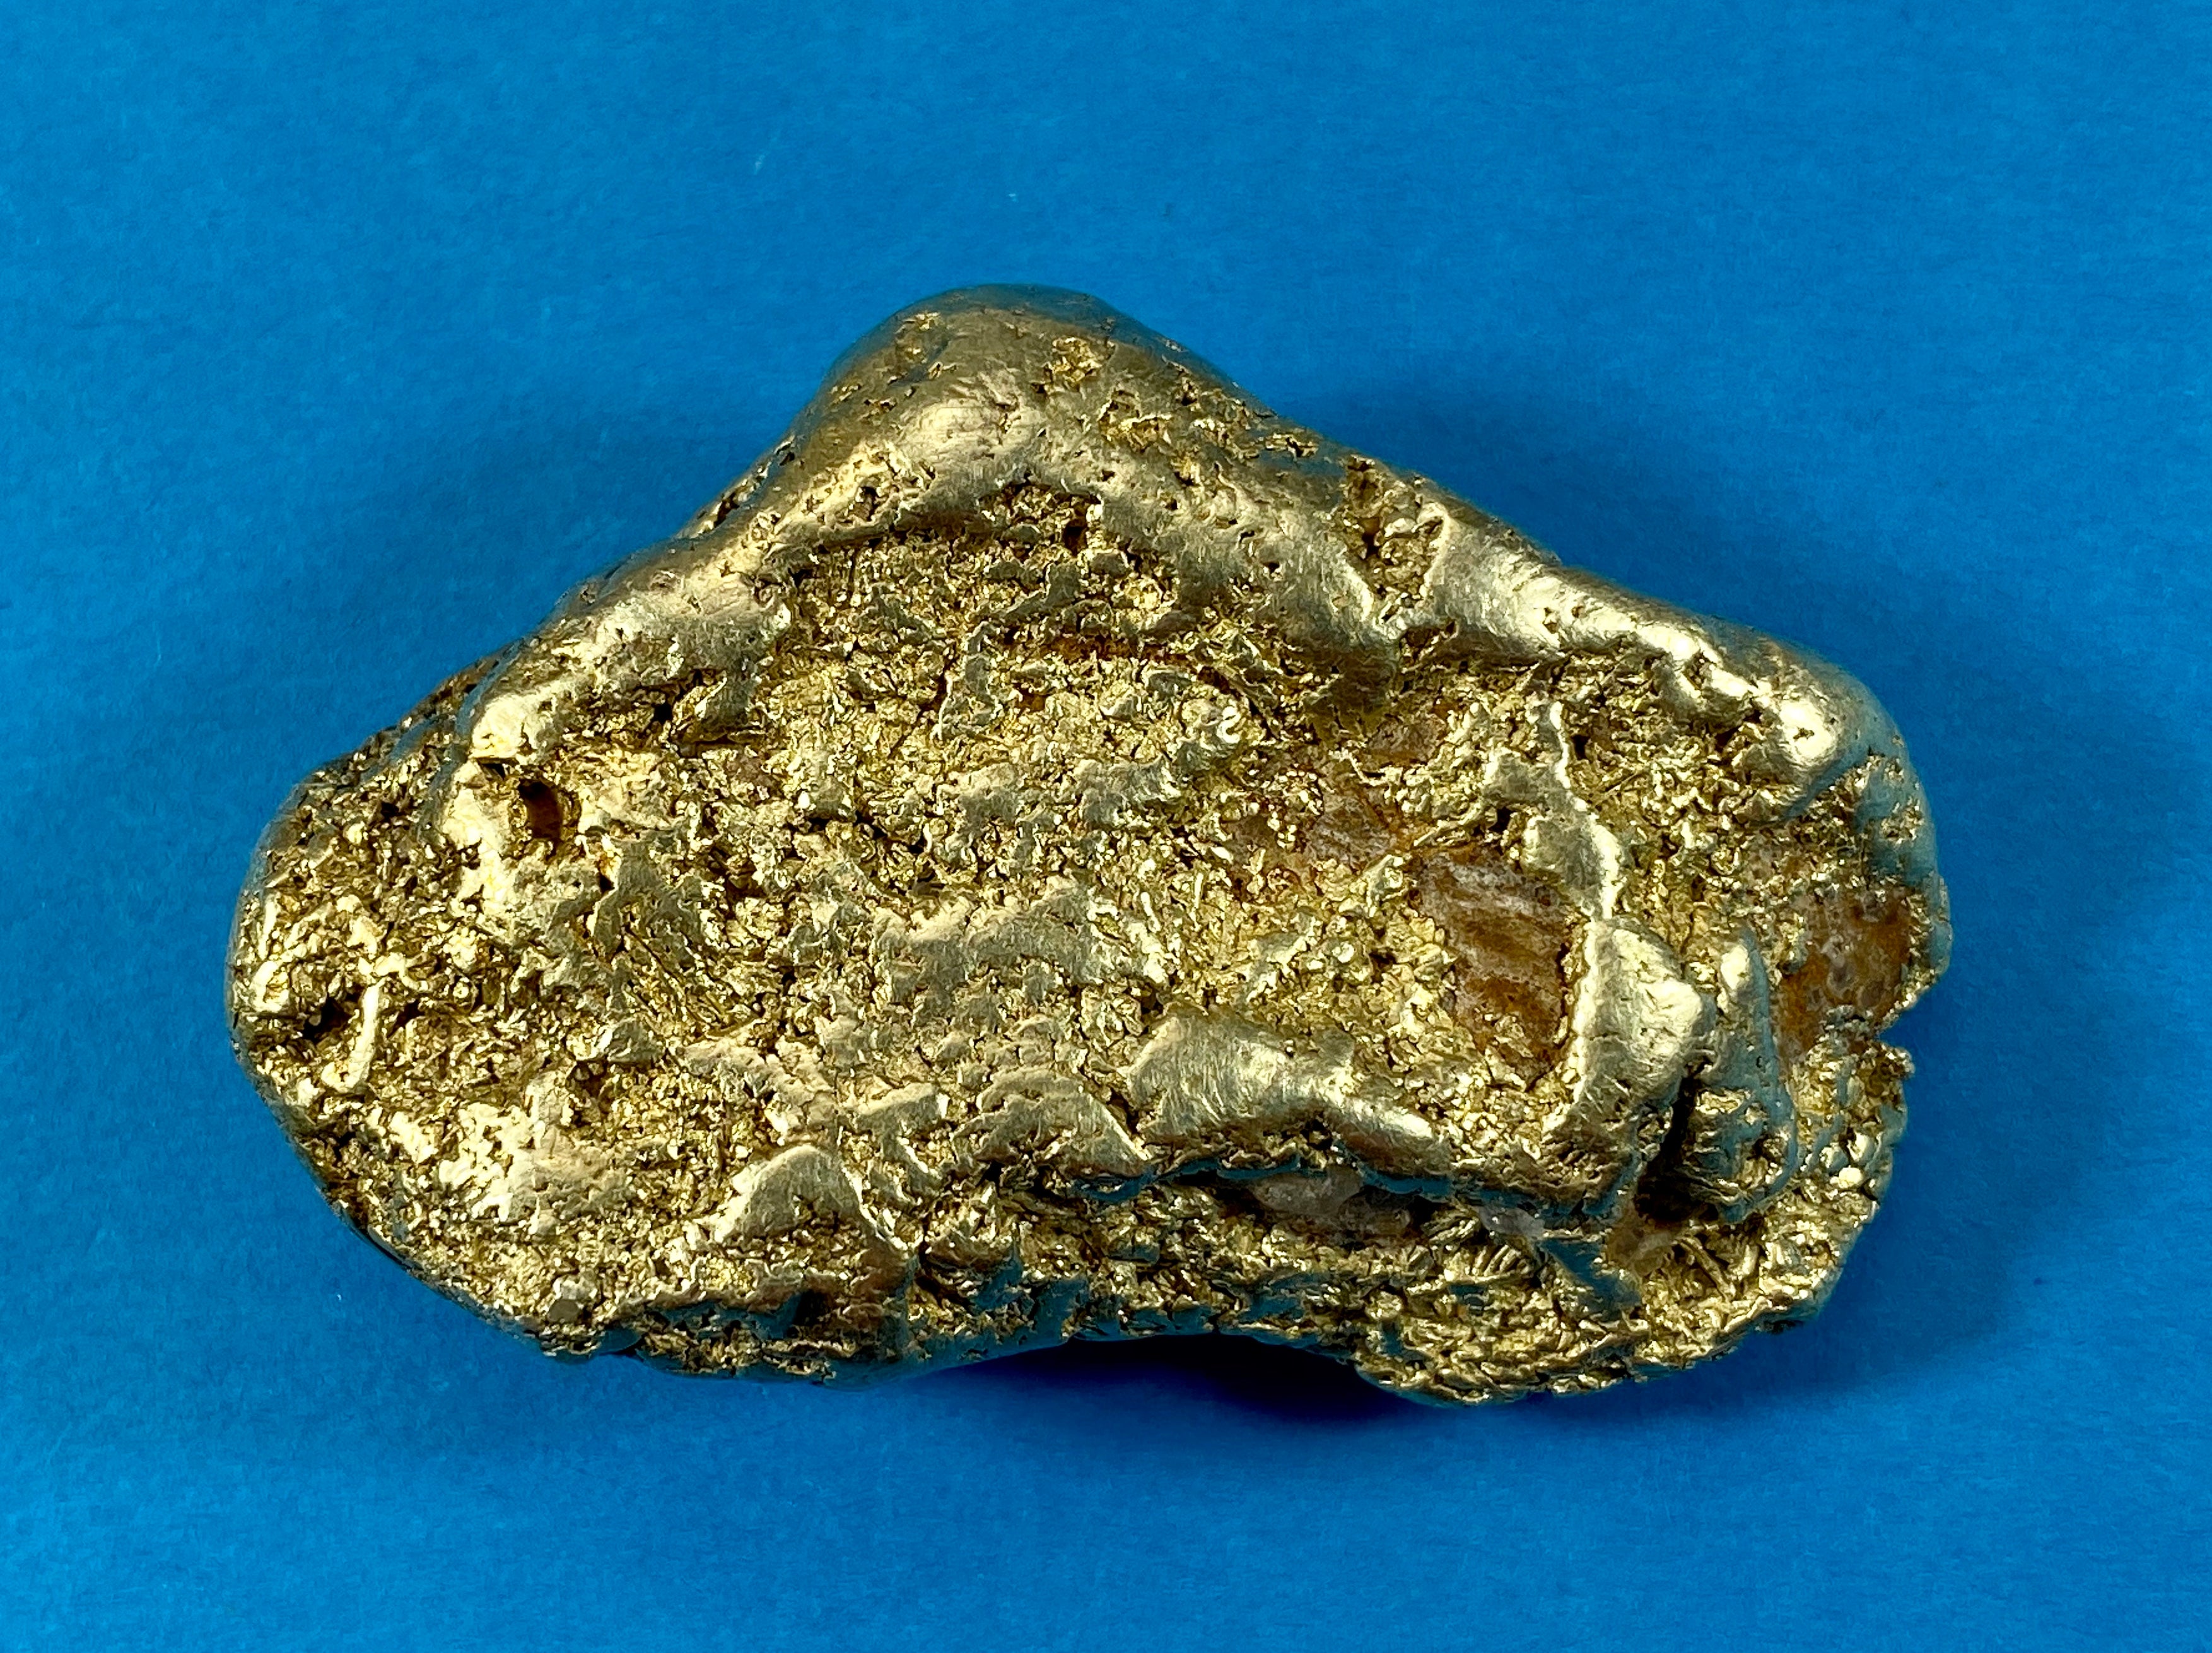 Nevada Electrum Natural Gold Nugget 151.38 Grams - 4.86 Troy Ounces. Very Rare